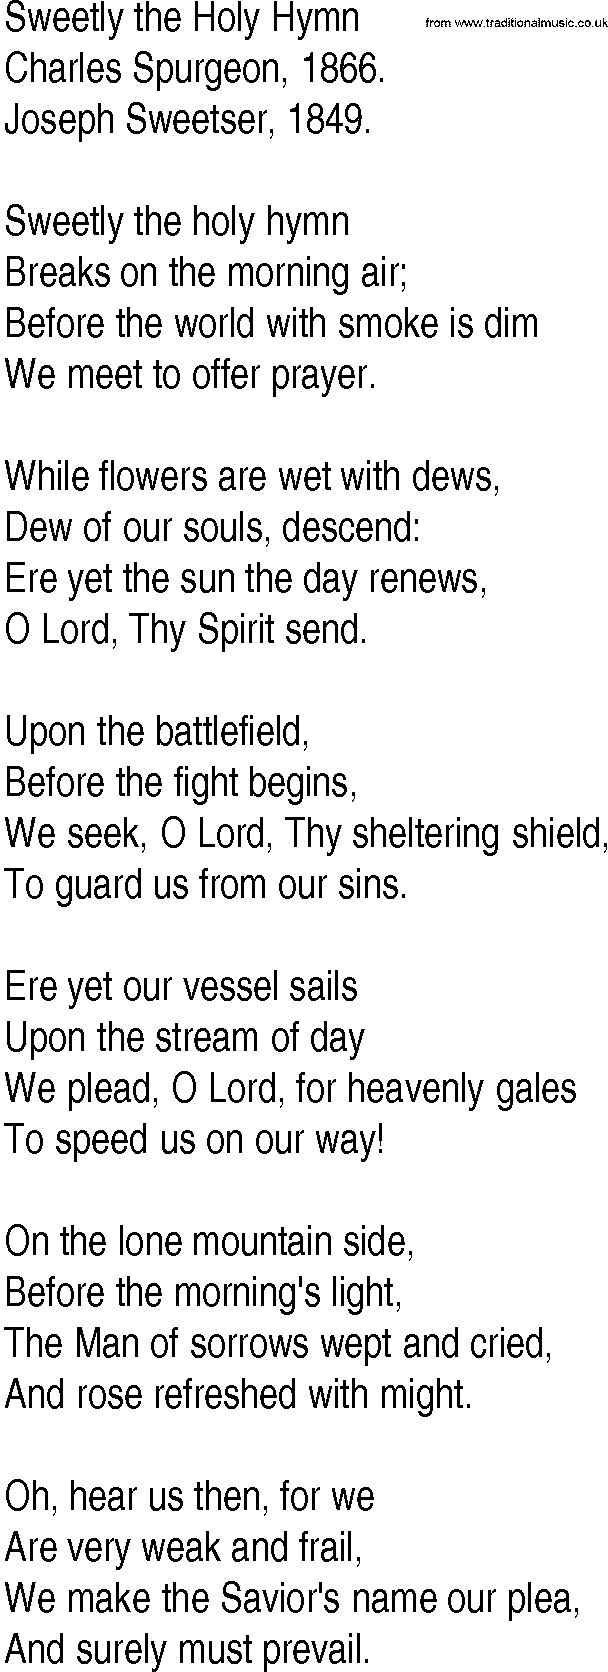 Hymn and Gospel Song: Sweetly the Holy Hymn by Charles Spurgeon lyrics